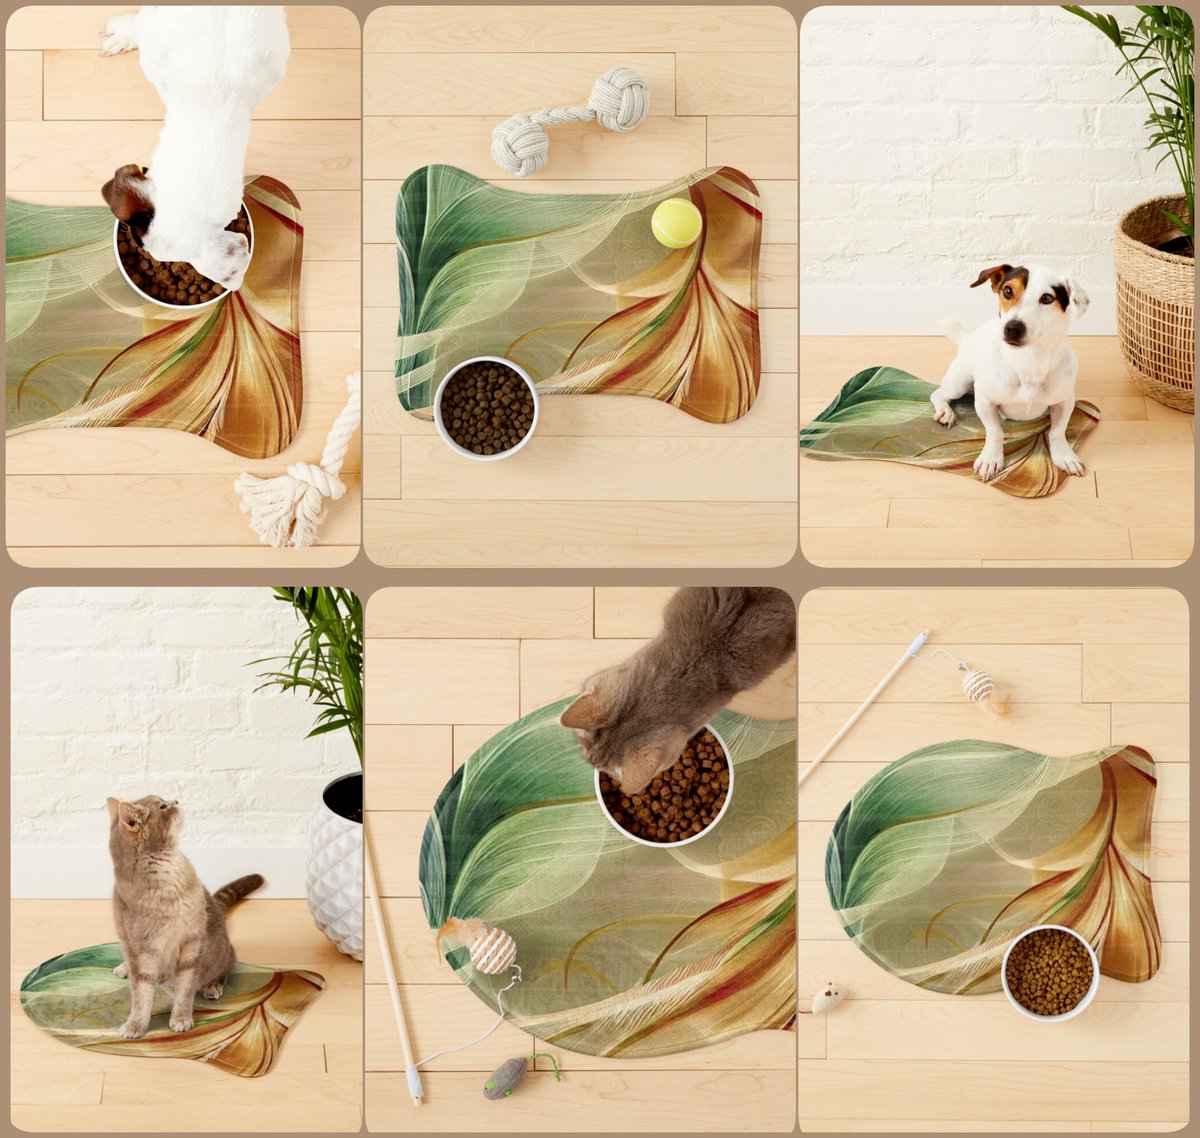 Marmalade Pet Mat~by Art Falaxy
~Artful Pets~ #pets #homedecor #art #artfalaxy #cats #dogs #blankets #mats #bandanas #animals #redbubble #trendy #modern #gifts #FindYourThing

redbubble.com/i/cat-mat/Marm…